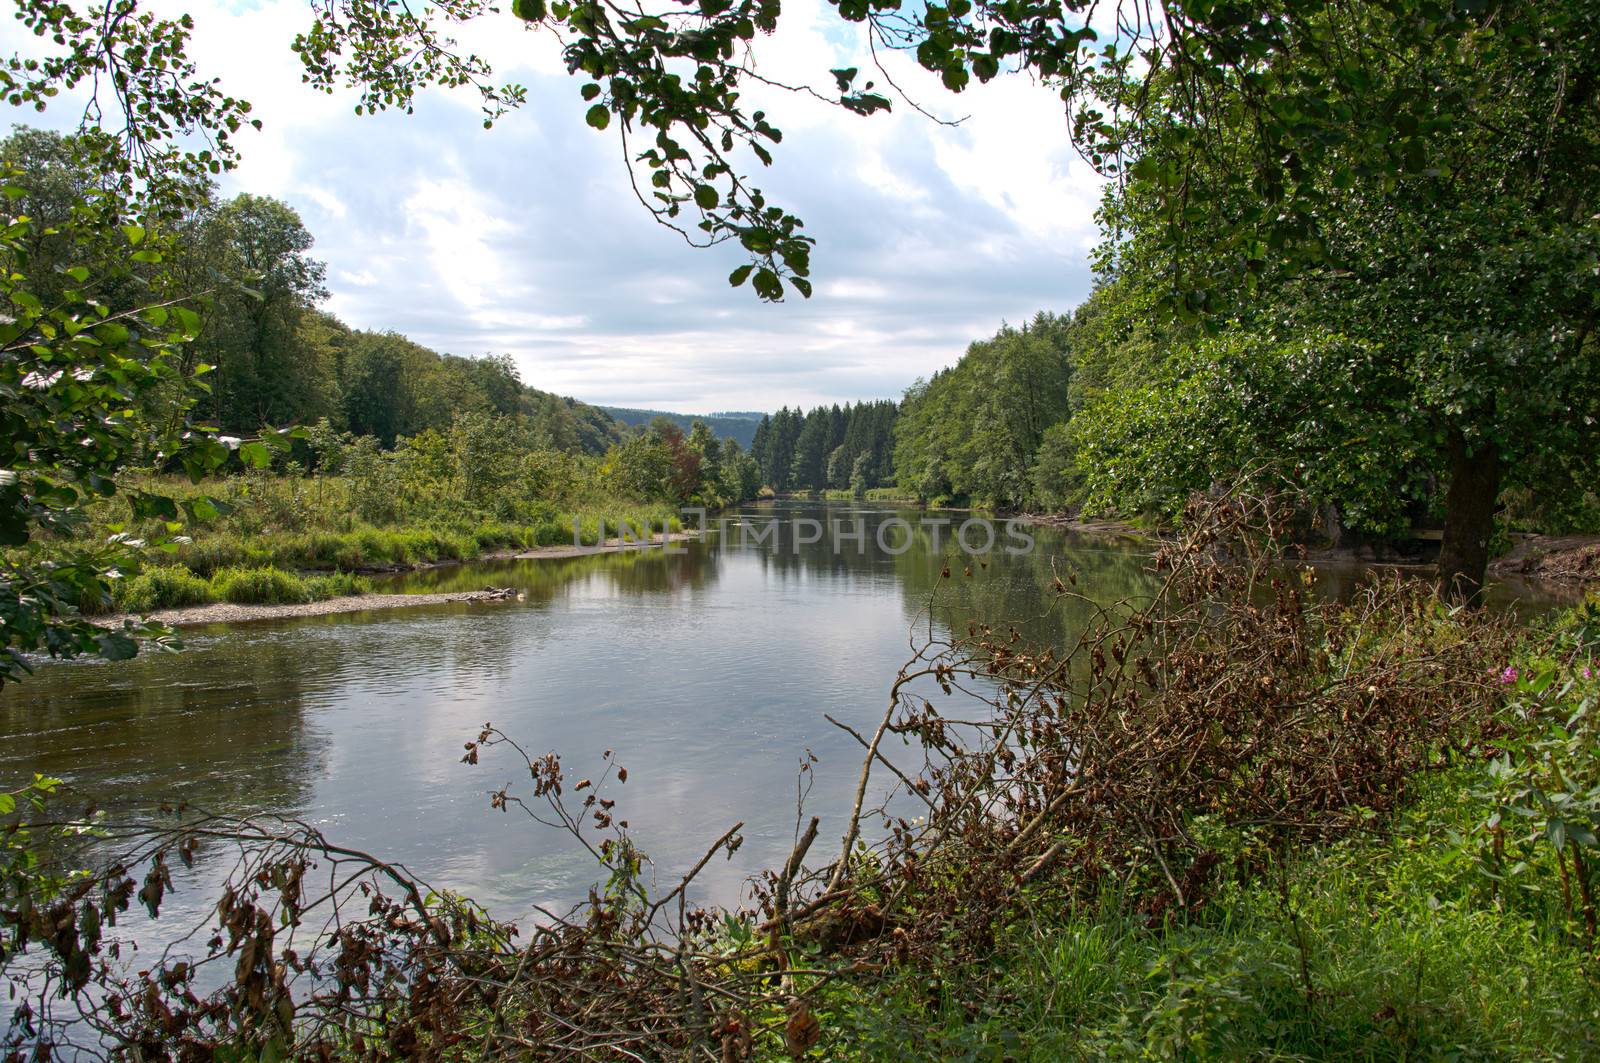 the river semois near the village bouillon in belgium by compuinfoto